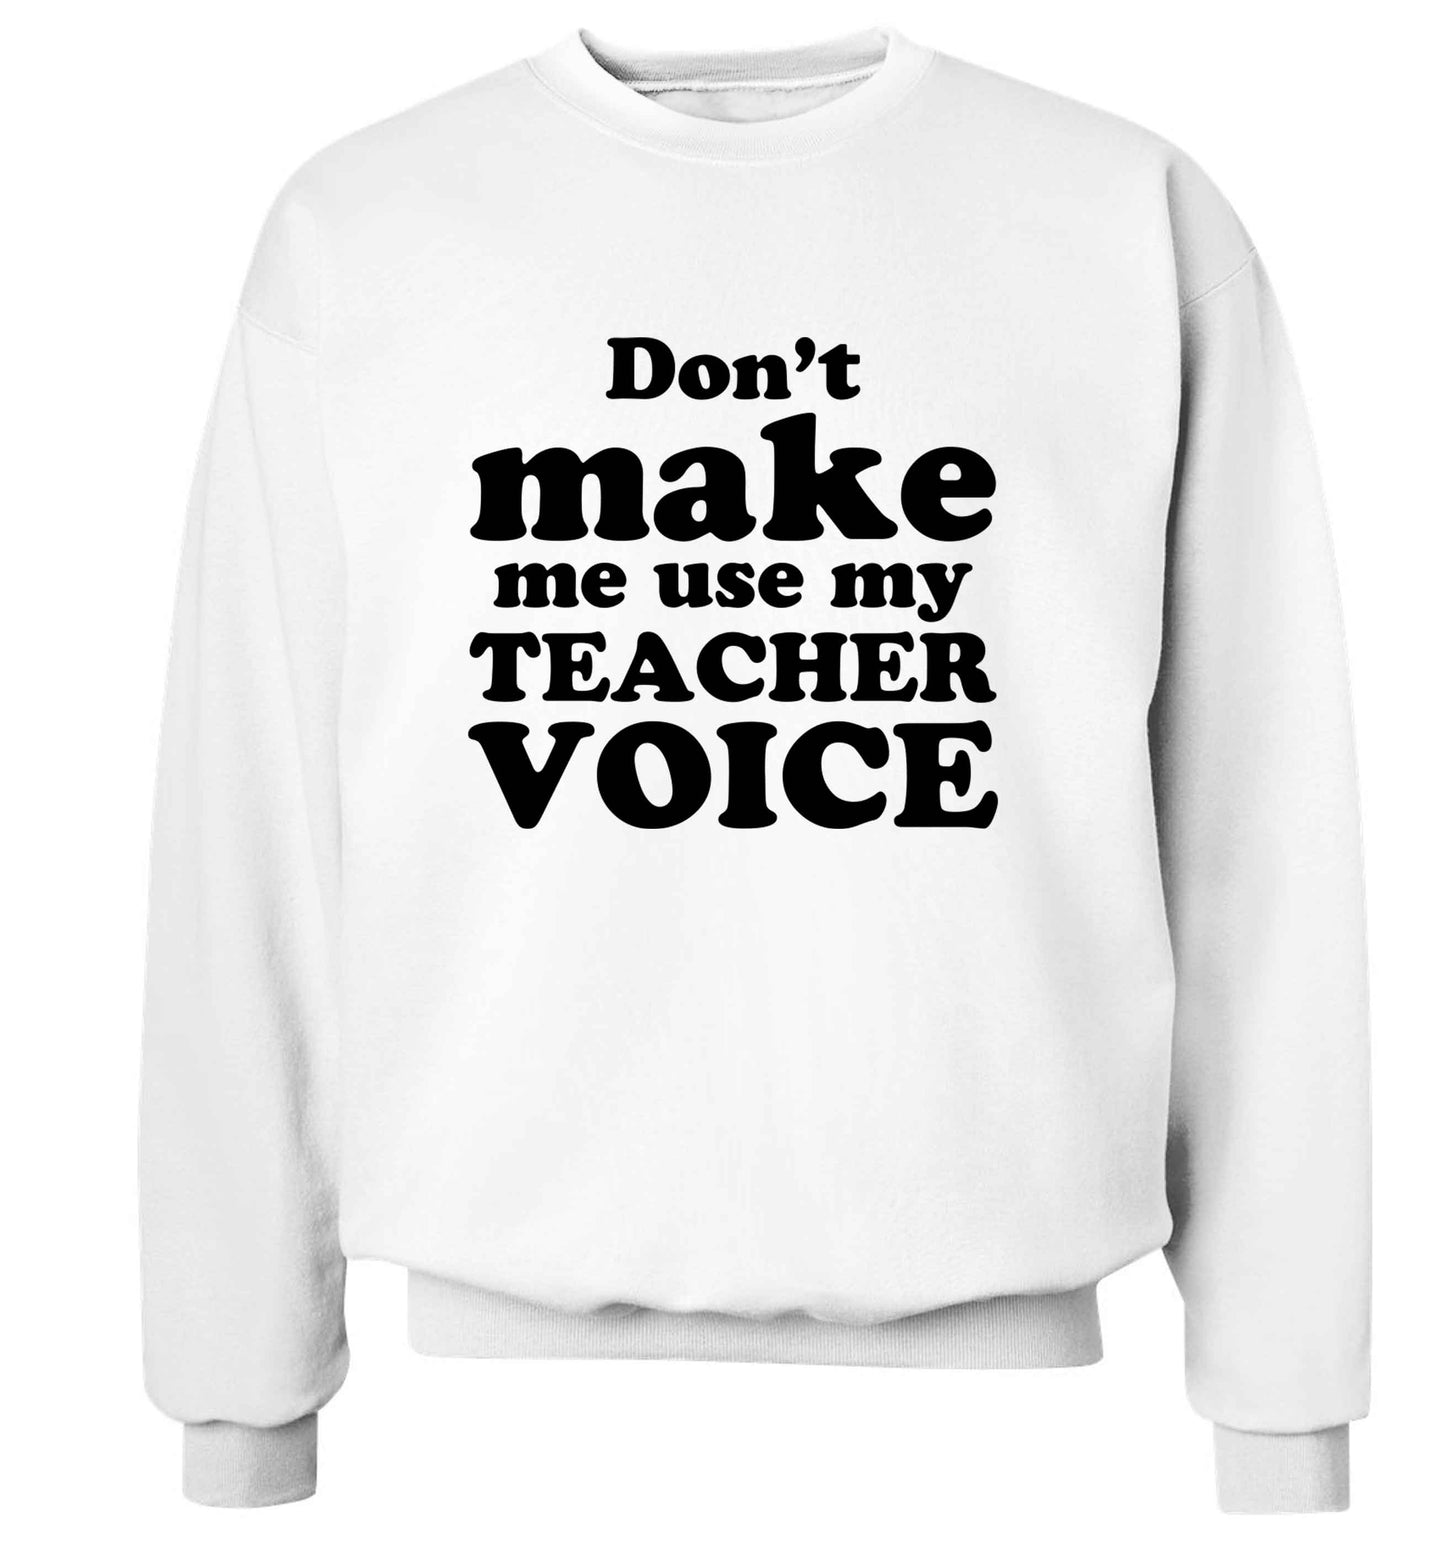 Don't make me use my teacher voice adult's unisex white sweater 2XL